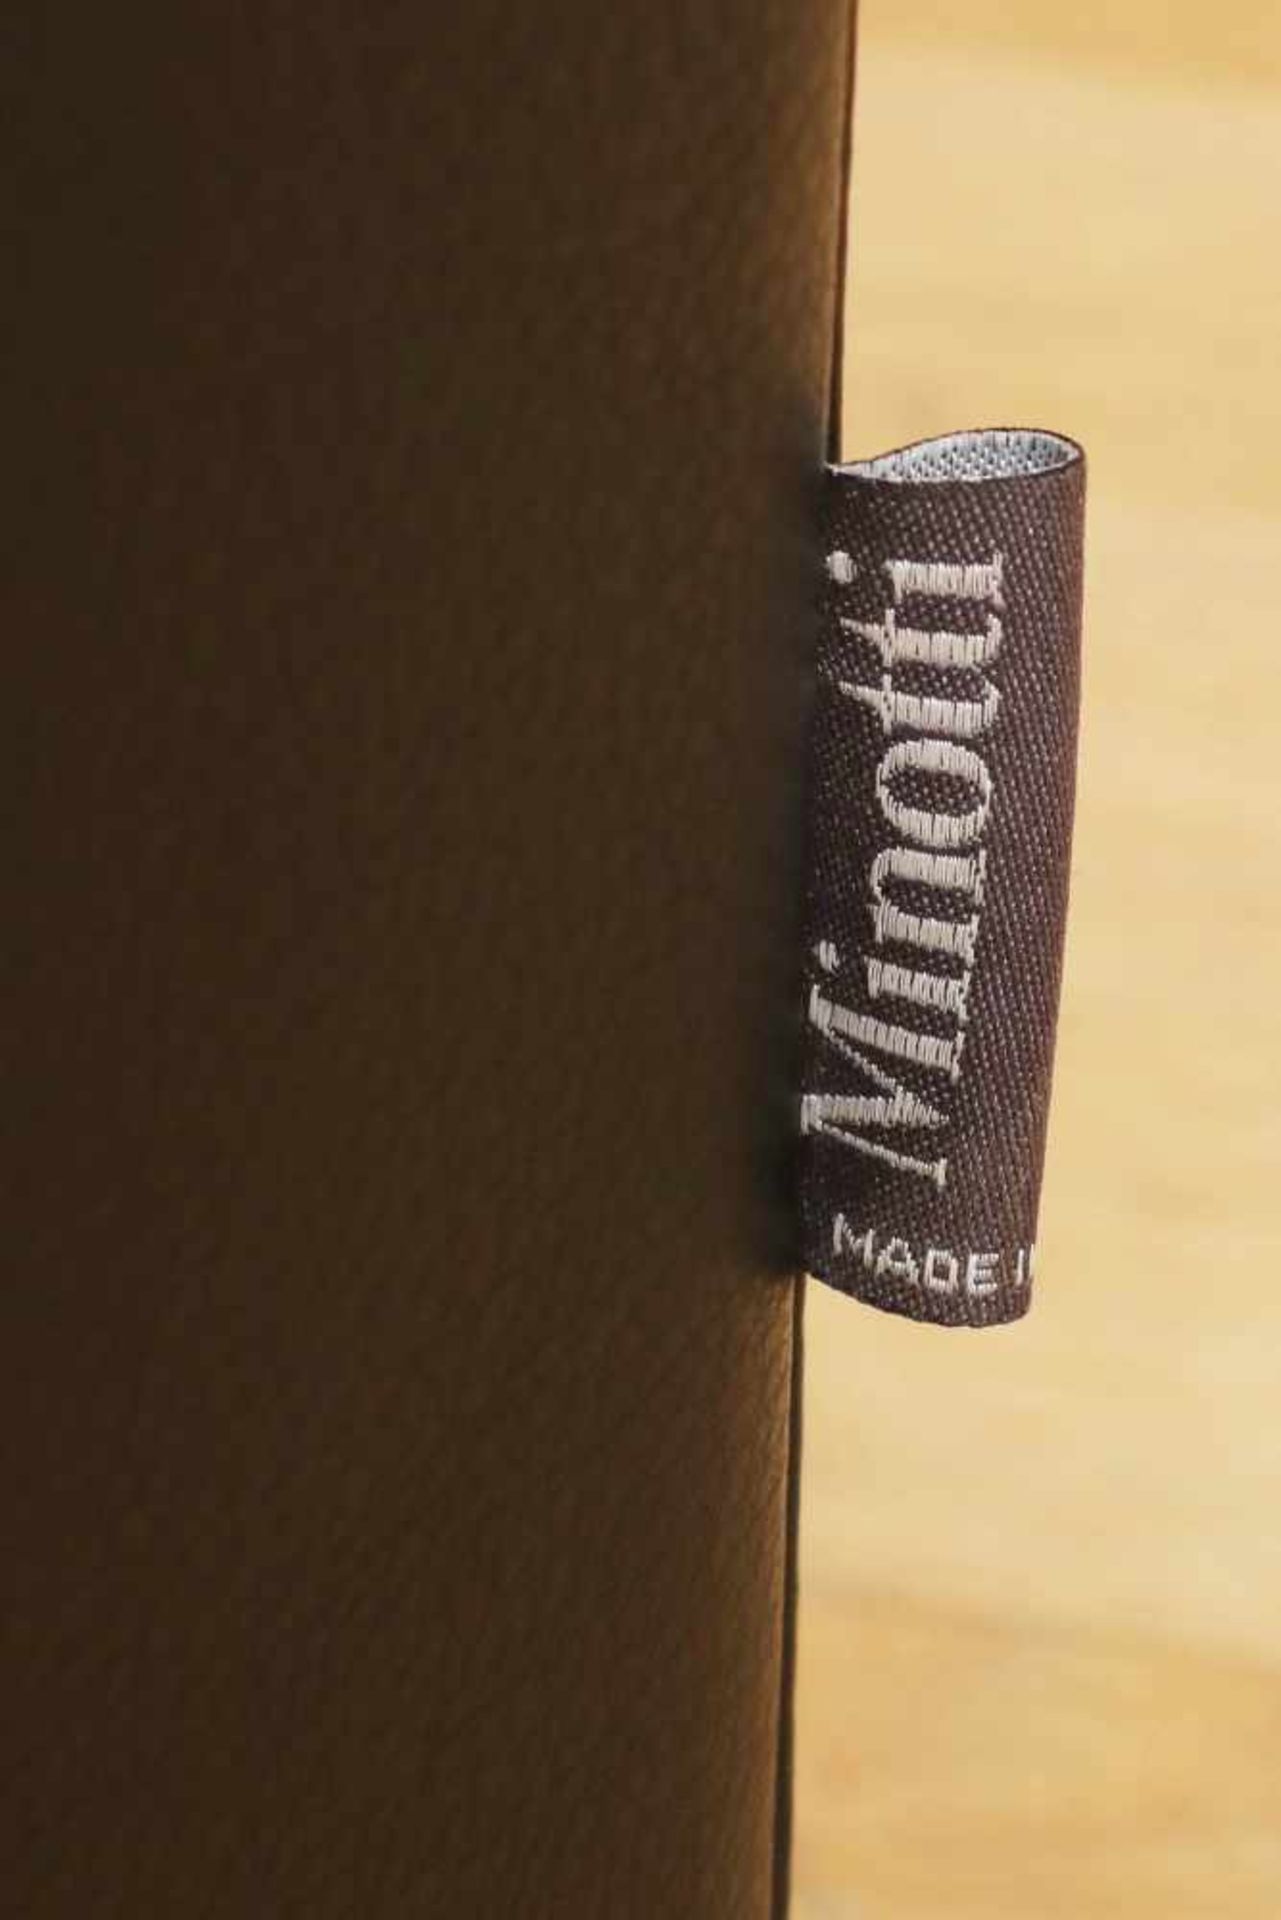 MINOTTI Lounge-/Armlehnsessel Italien, allseitig schwarz beledert, würfelförmig, loses Sitzkissen, - Bild 2 aus 2